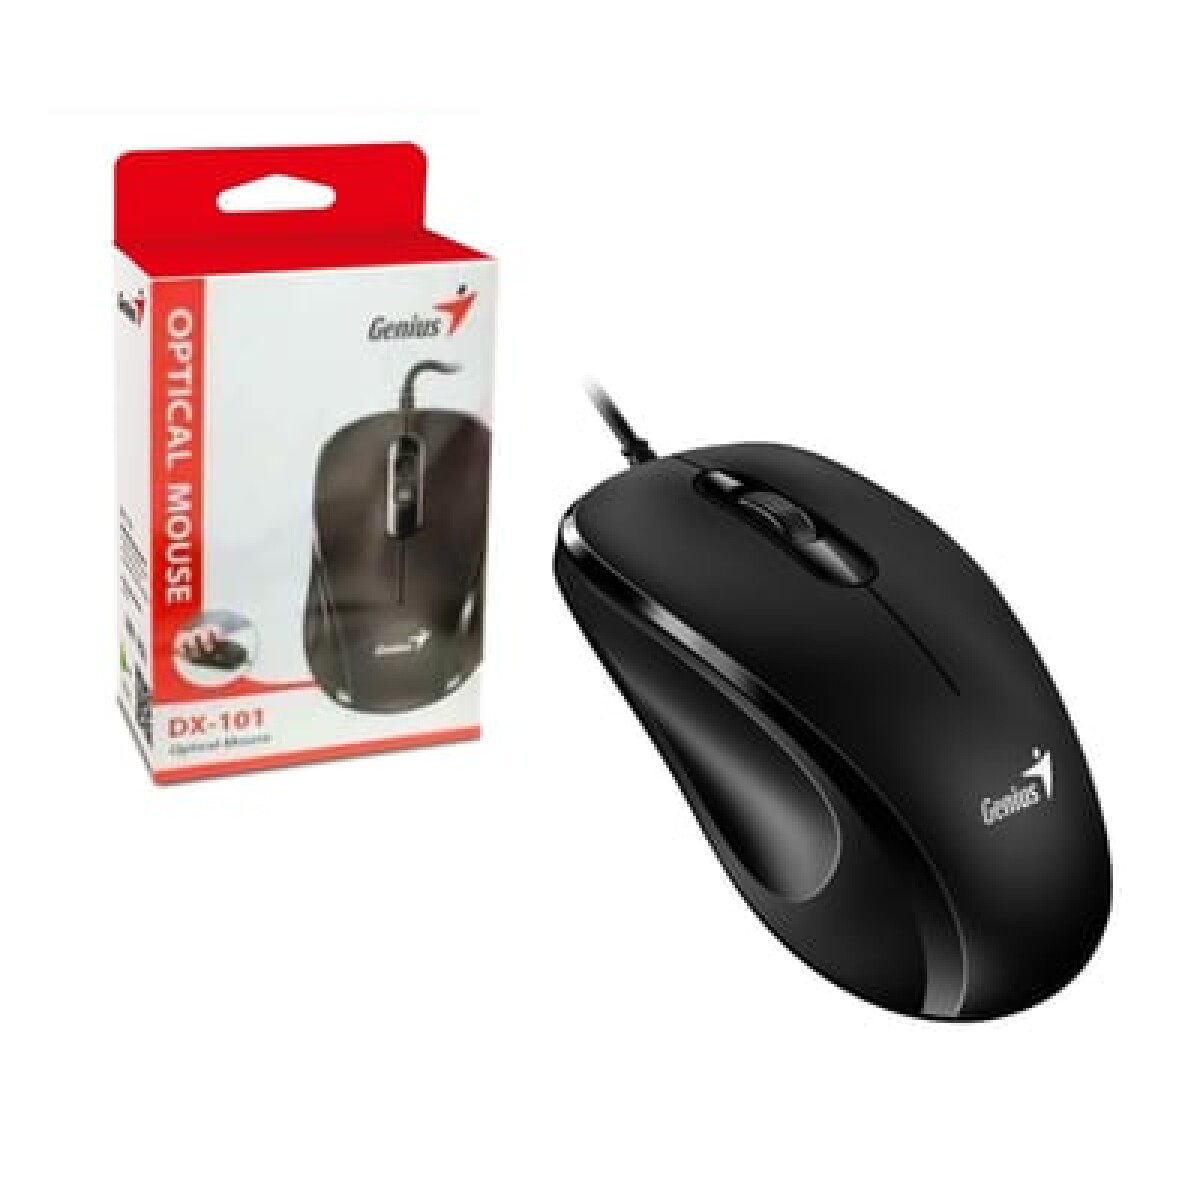 Mouse Optico USB Genius DX-101 Negro - Unica 